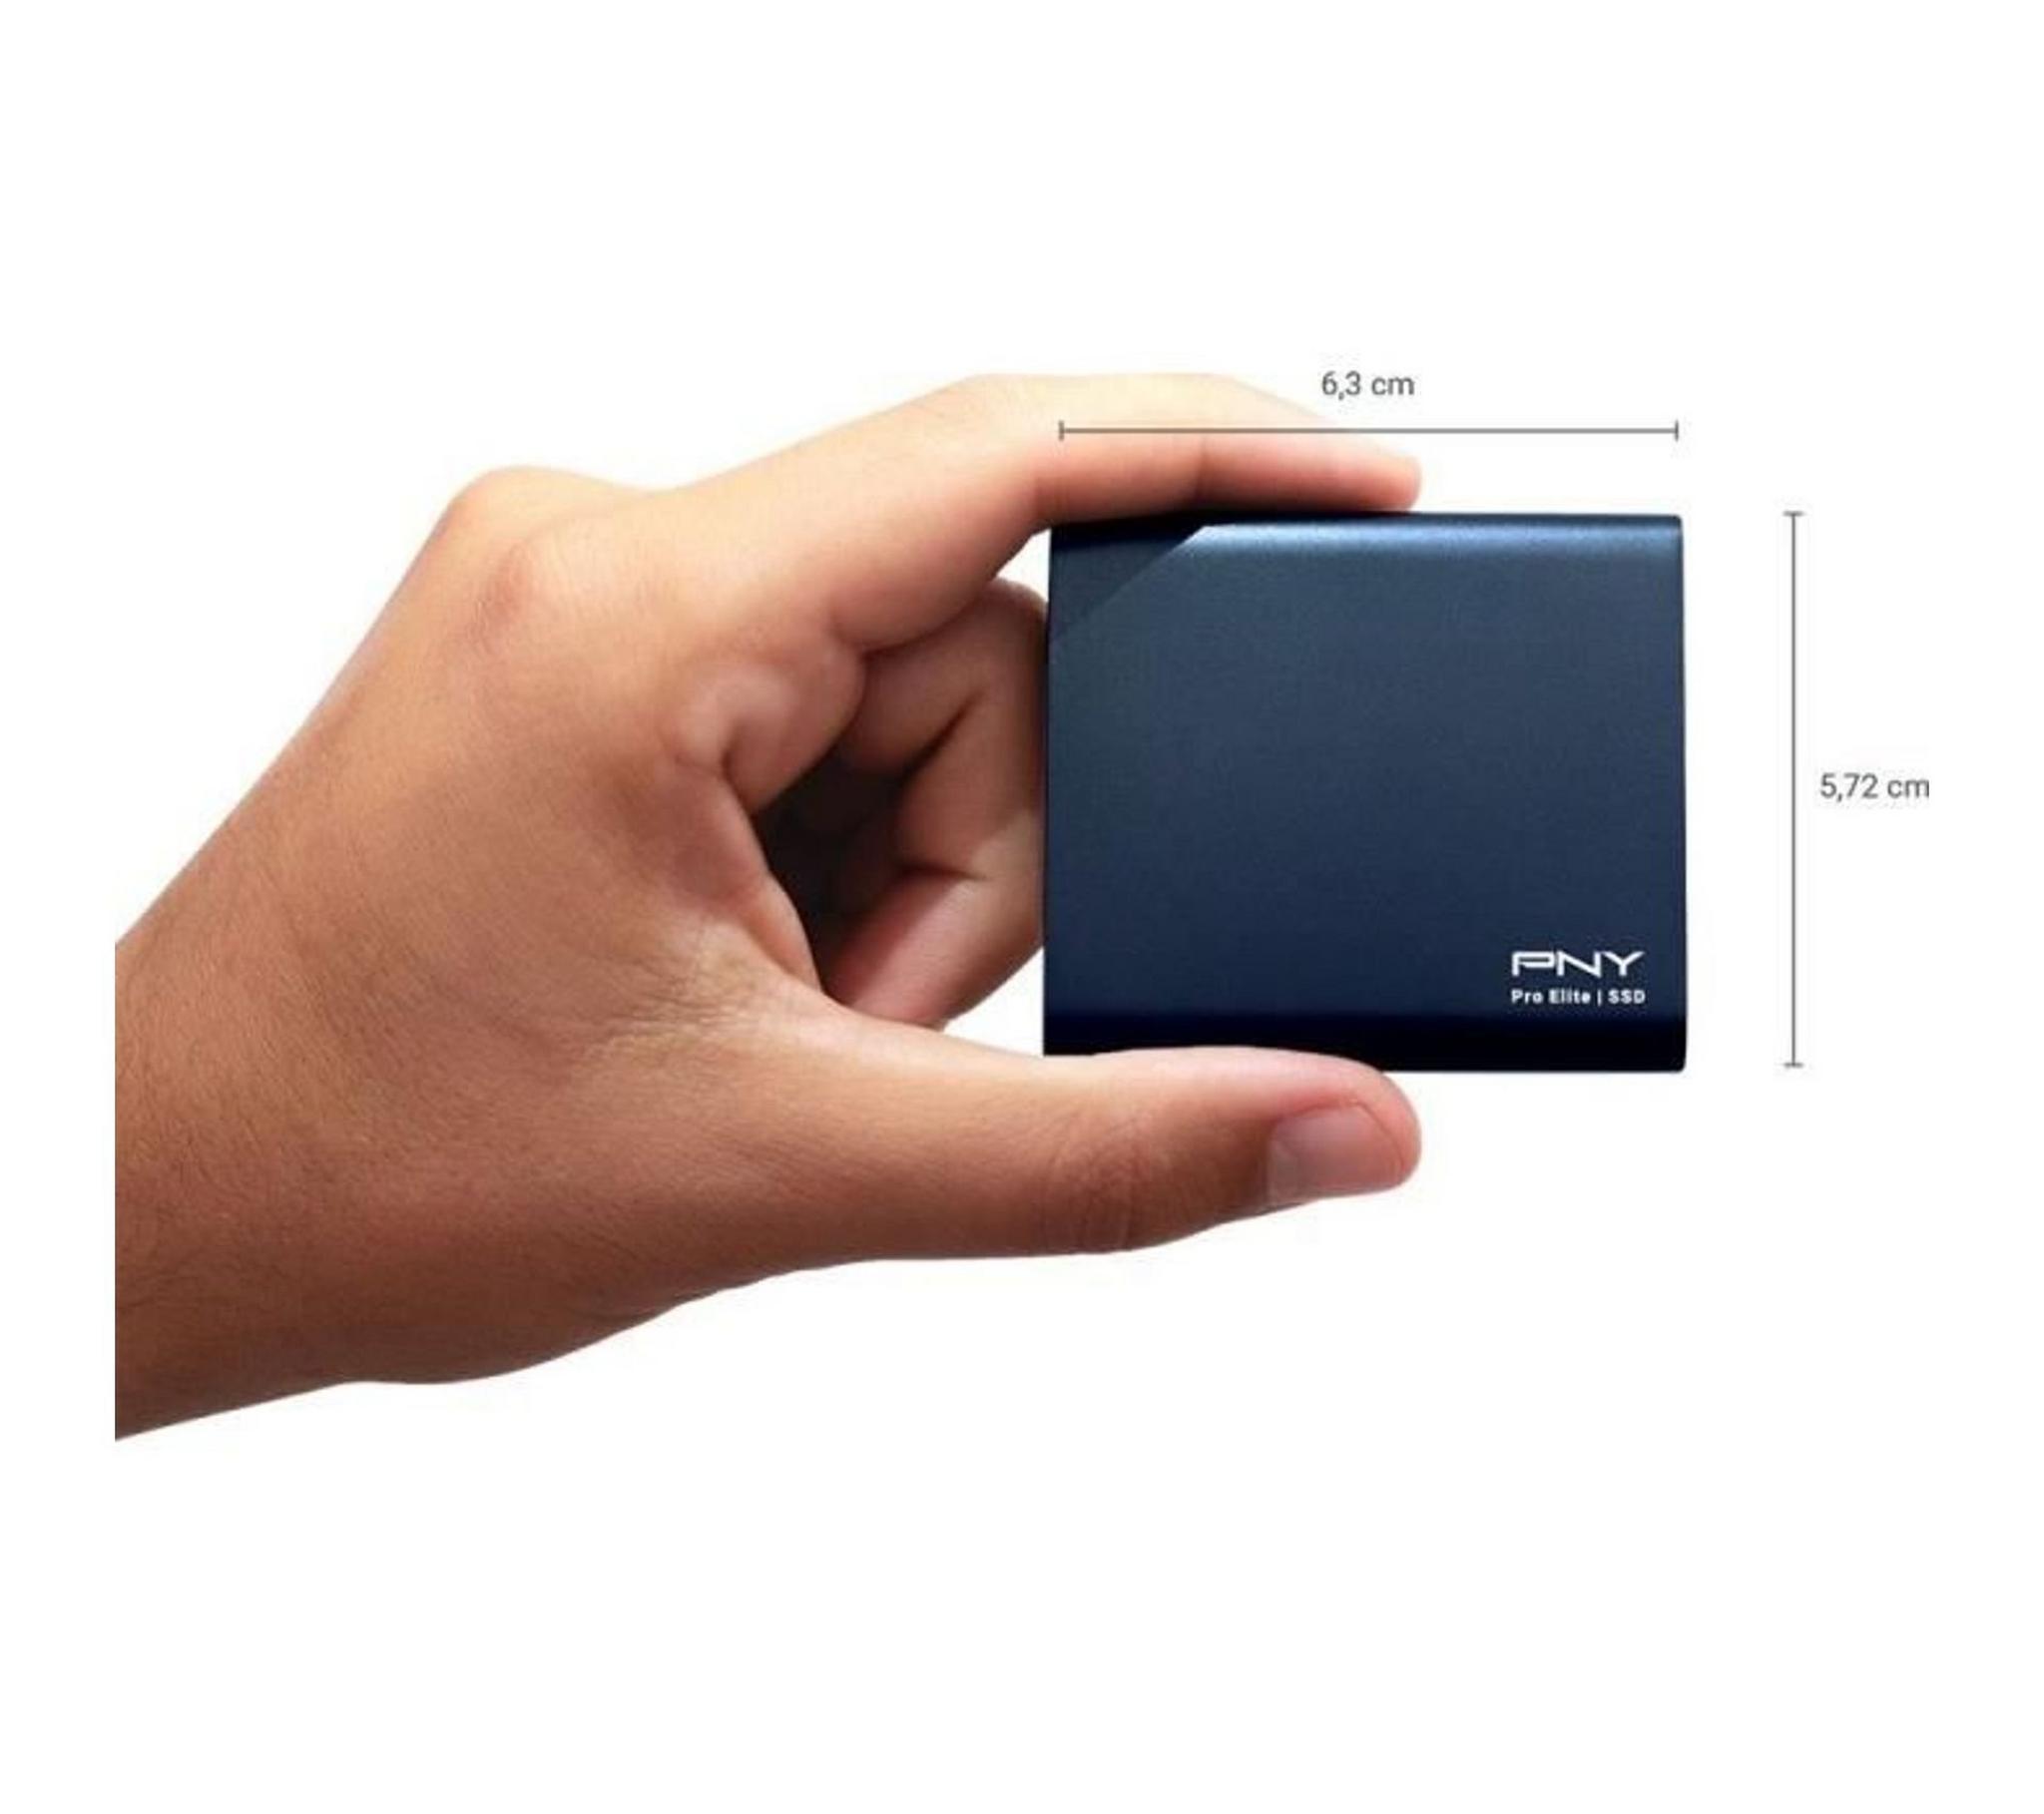 PNY Pro Elite USB 3.2 Gen 2 500GB SSD - Blue